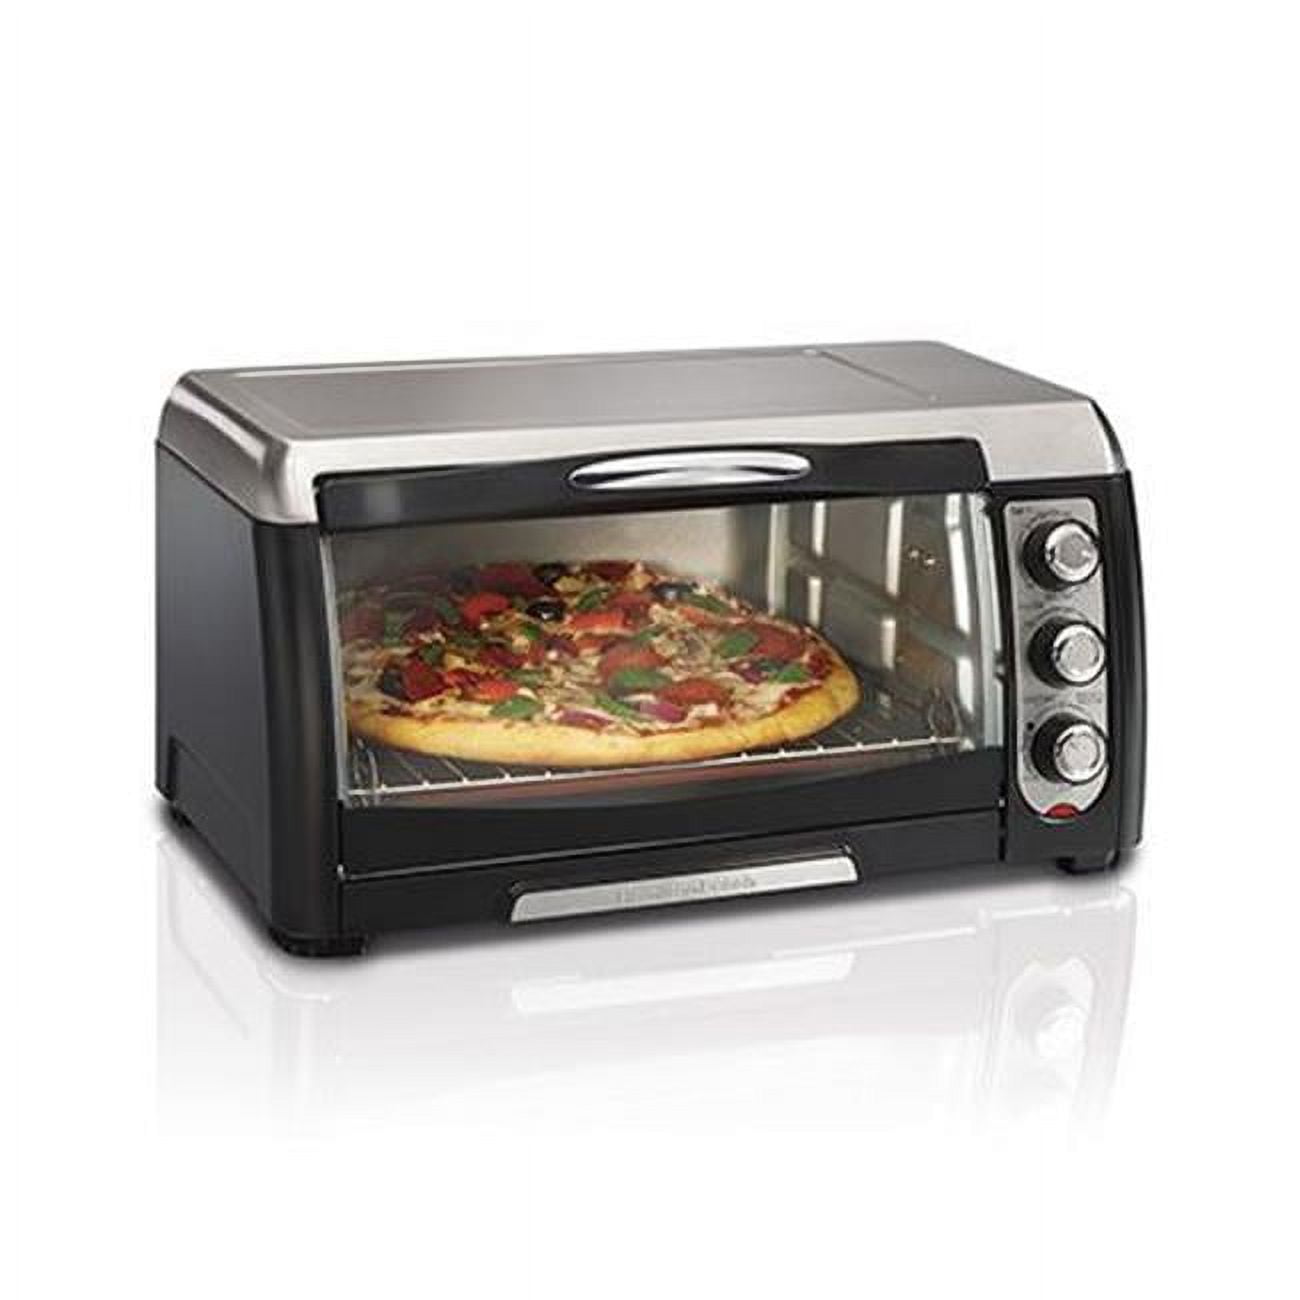 6 Slice 12 Pizza Toaster Oven BlackSS